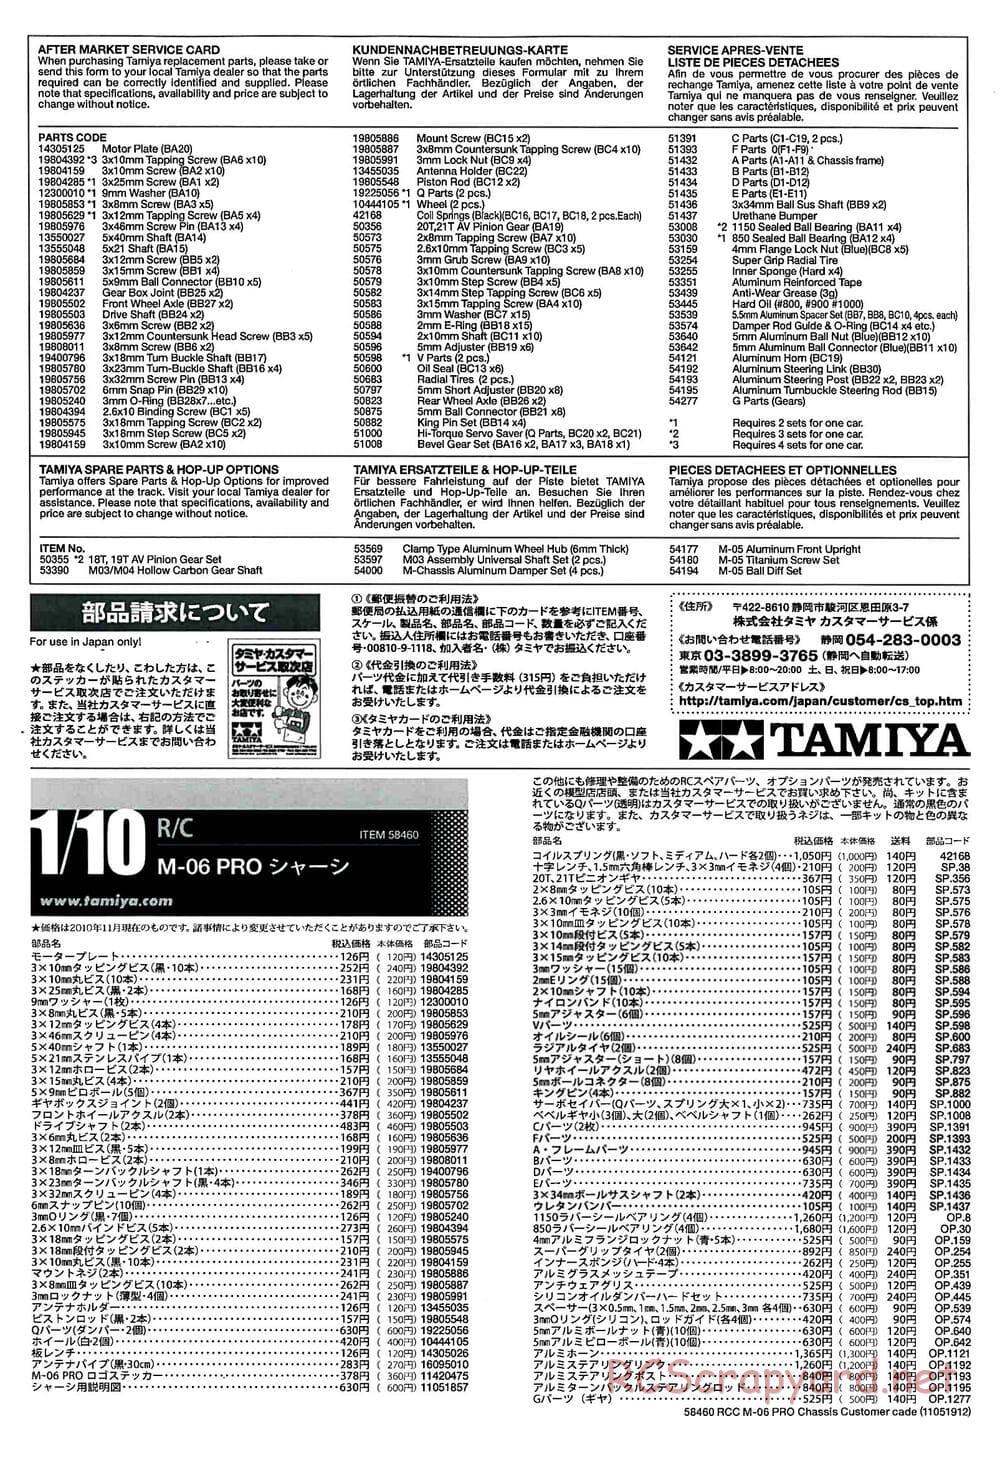 Tamiya - M-06 Pro Chassis - Manual - Page 25